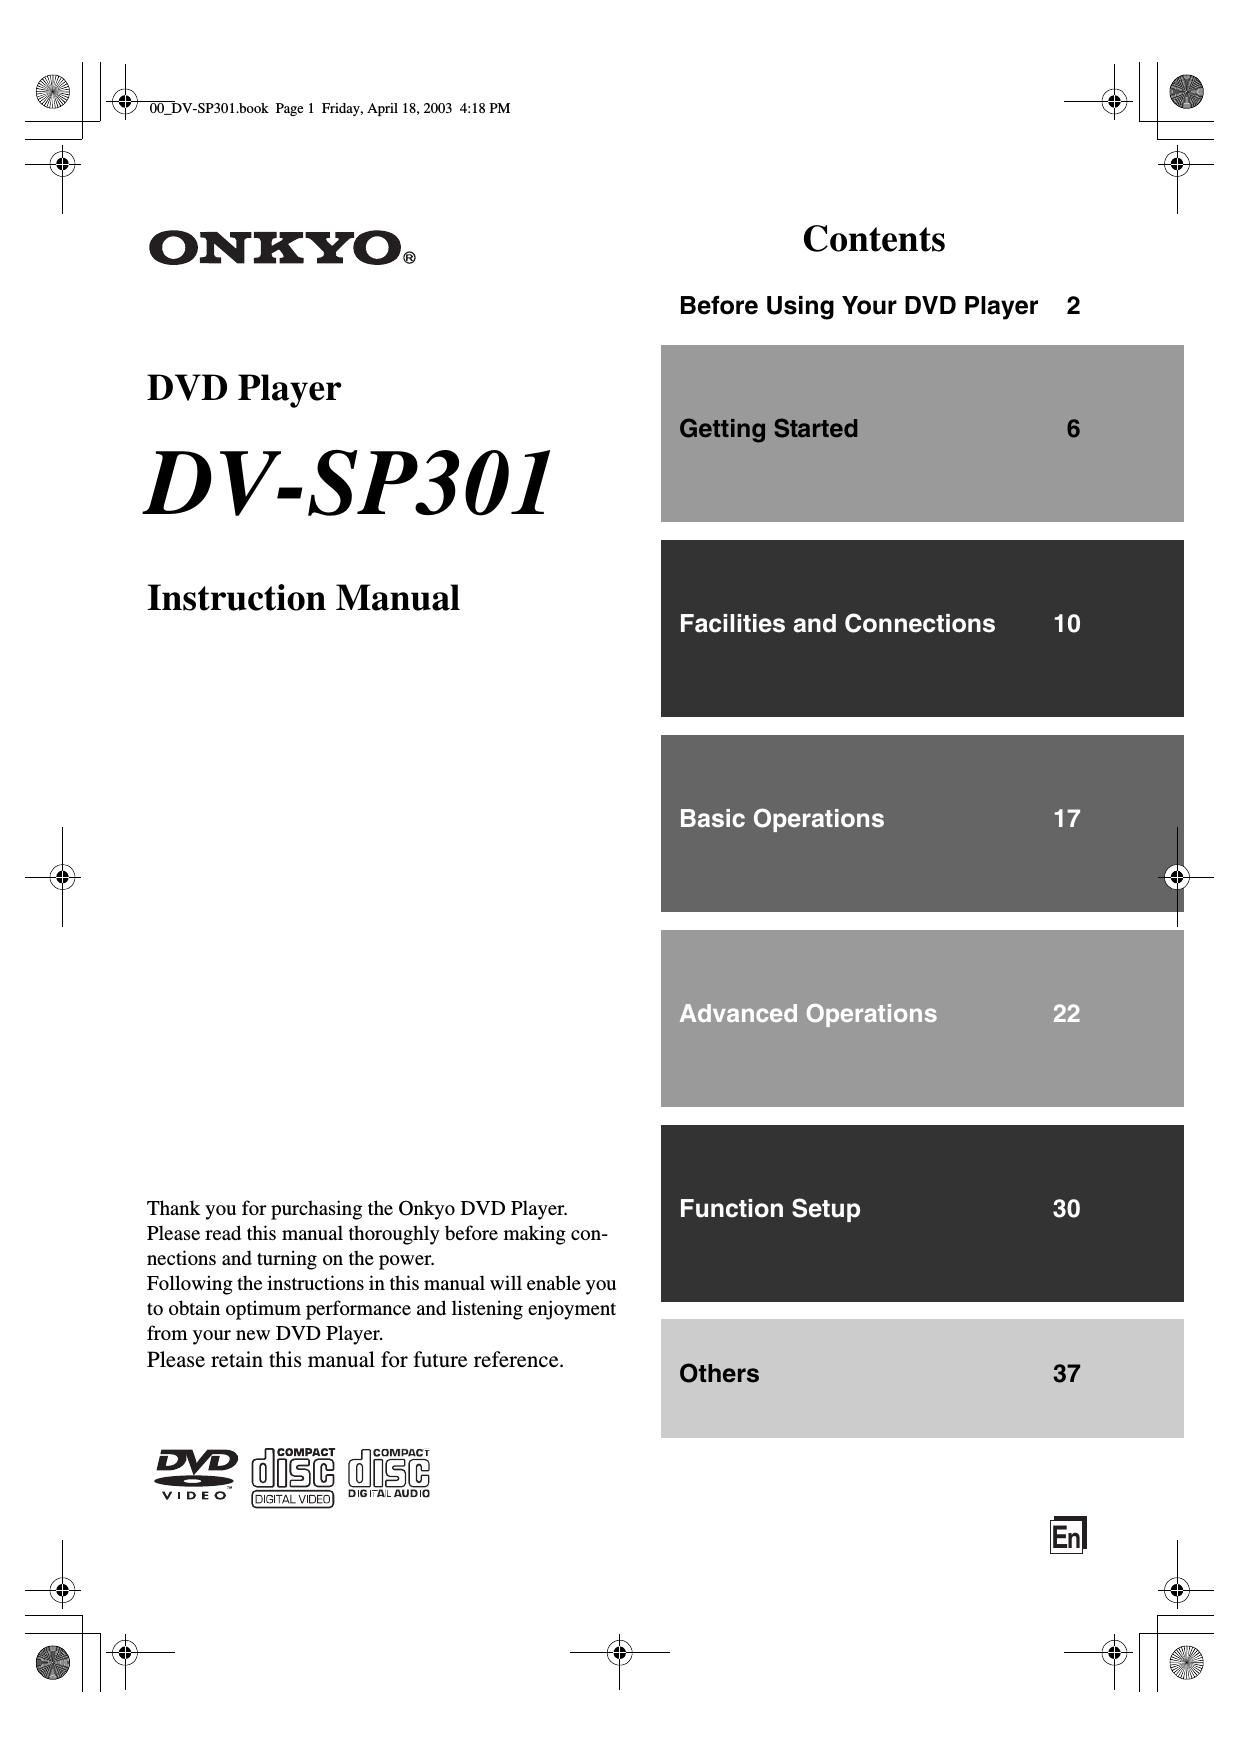 Onkyo DVSP 301 Owners Manual